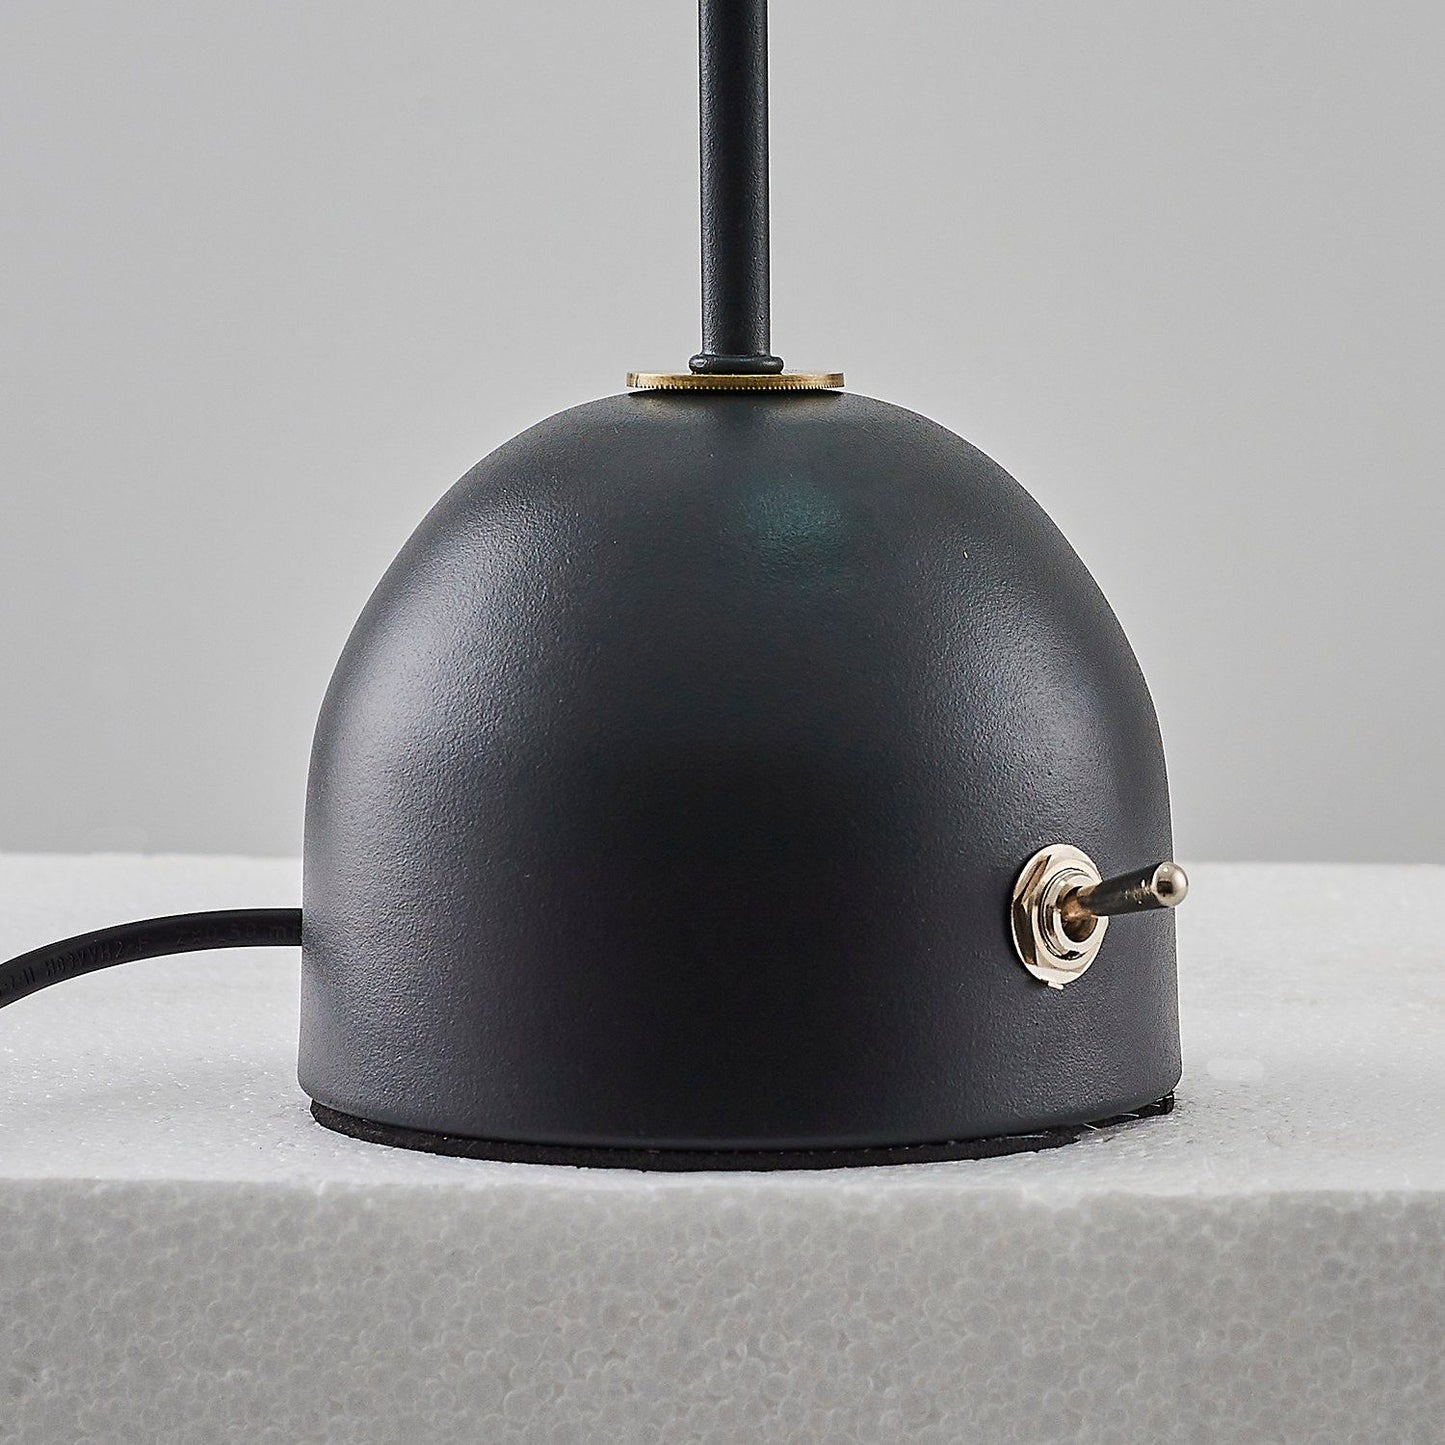 Niso - 103-19-19 - Table Lamp